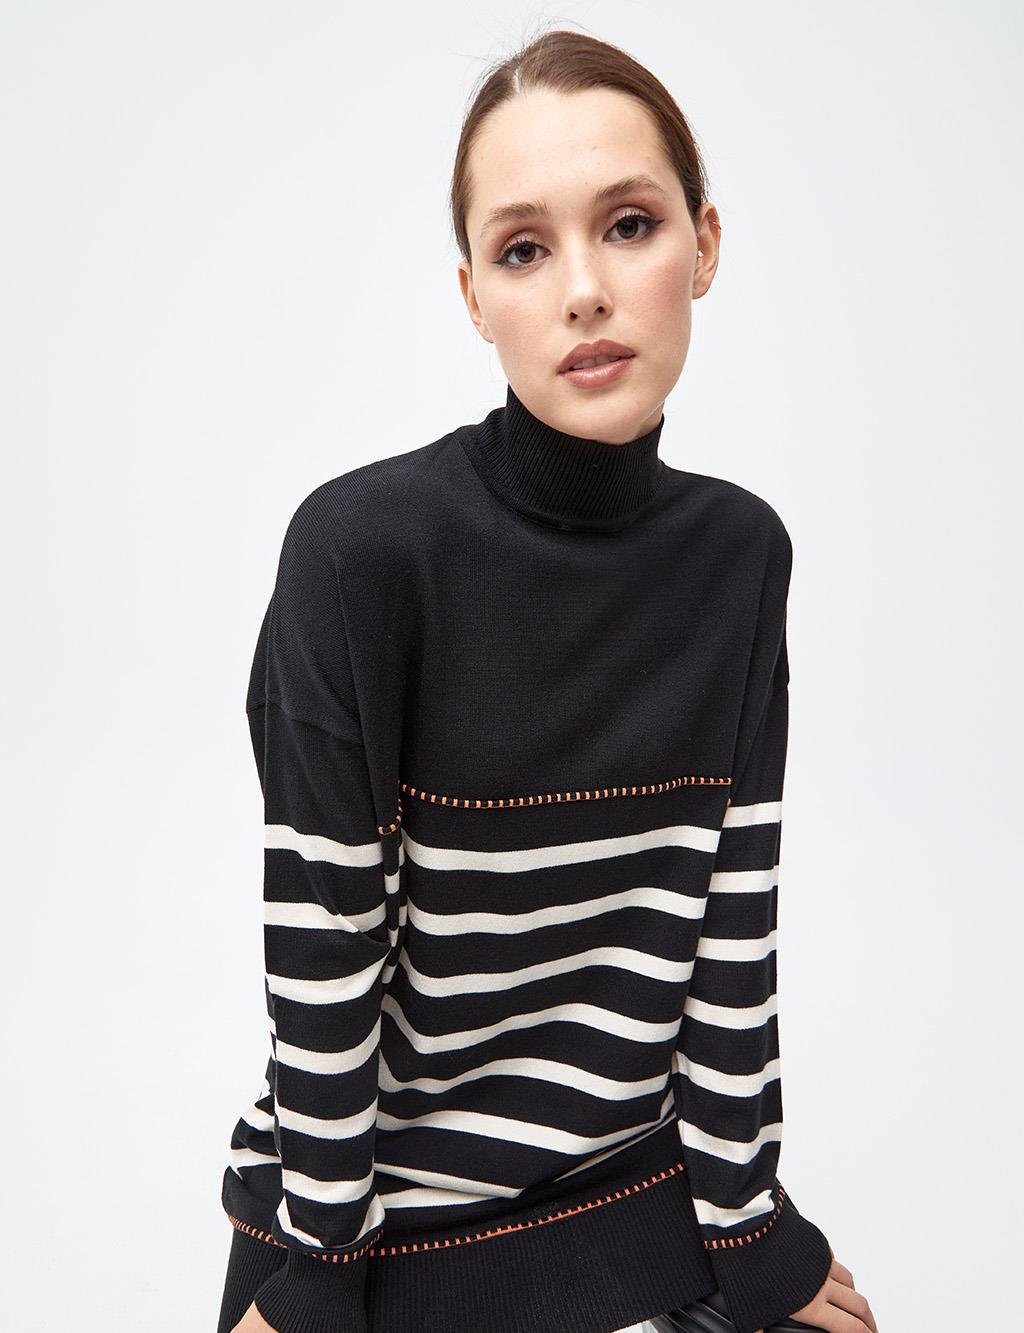 Striped Half Turtleneck Knitwear Tunic Black - Kayra.com